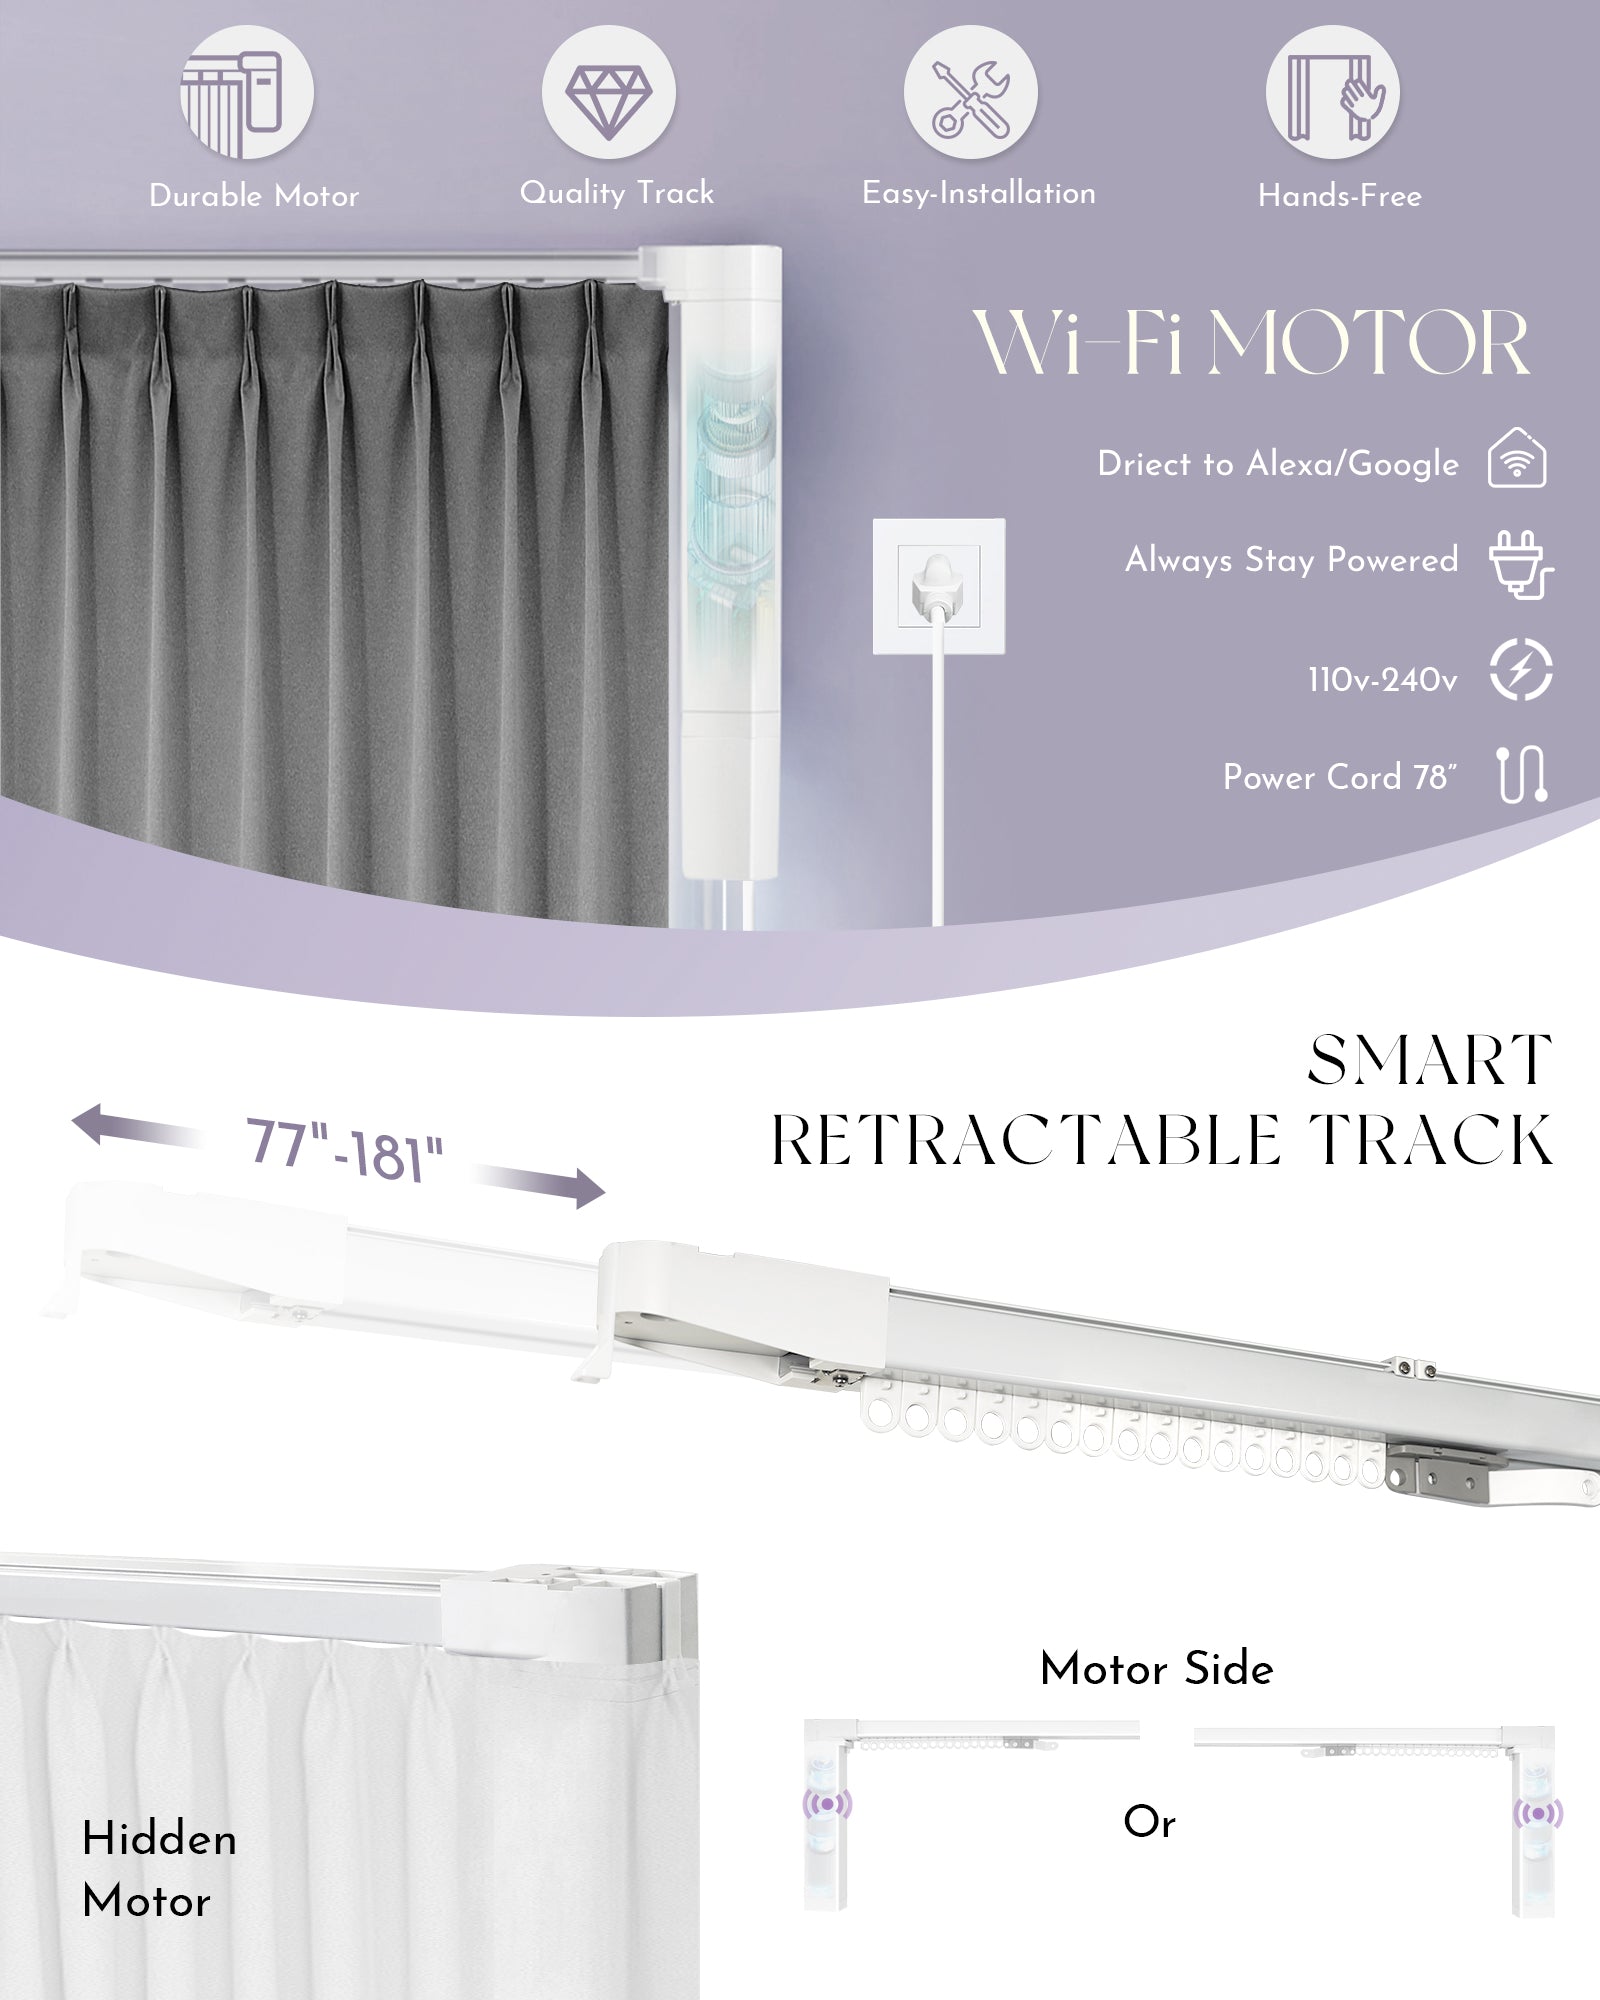 Graywind Smart Curtain Set Split Draw | Light Filtering Series | Customizable